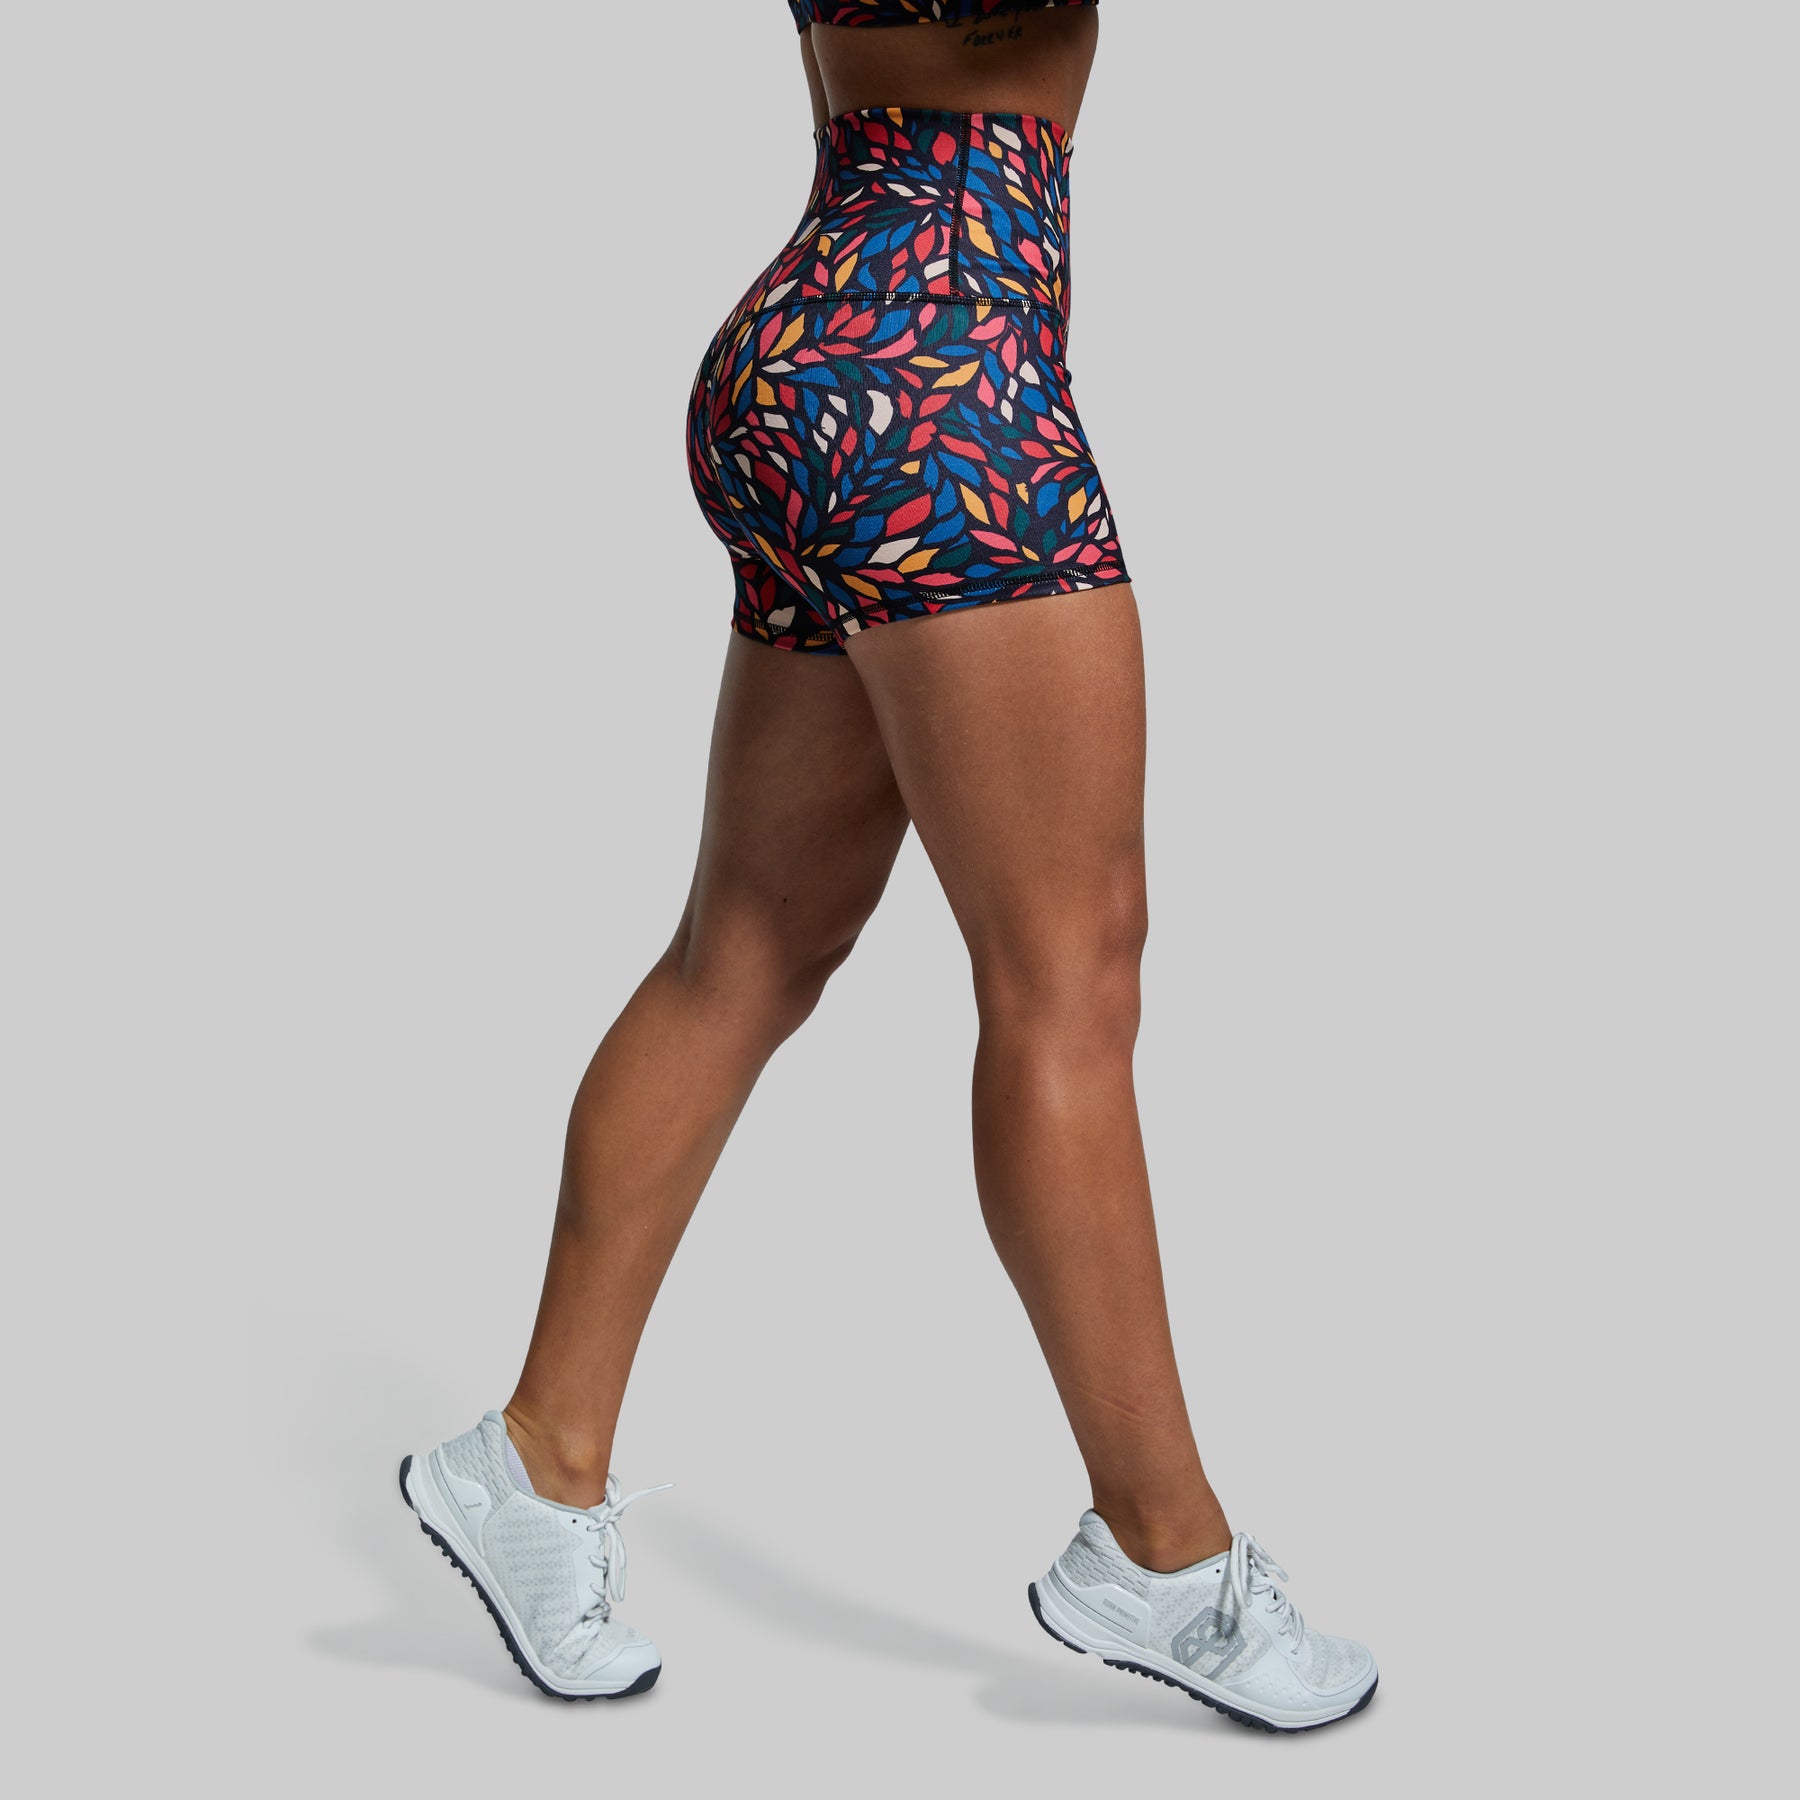 Women's High Waisted Booty Shorts